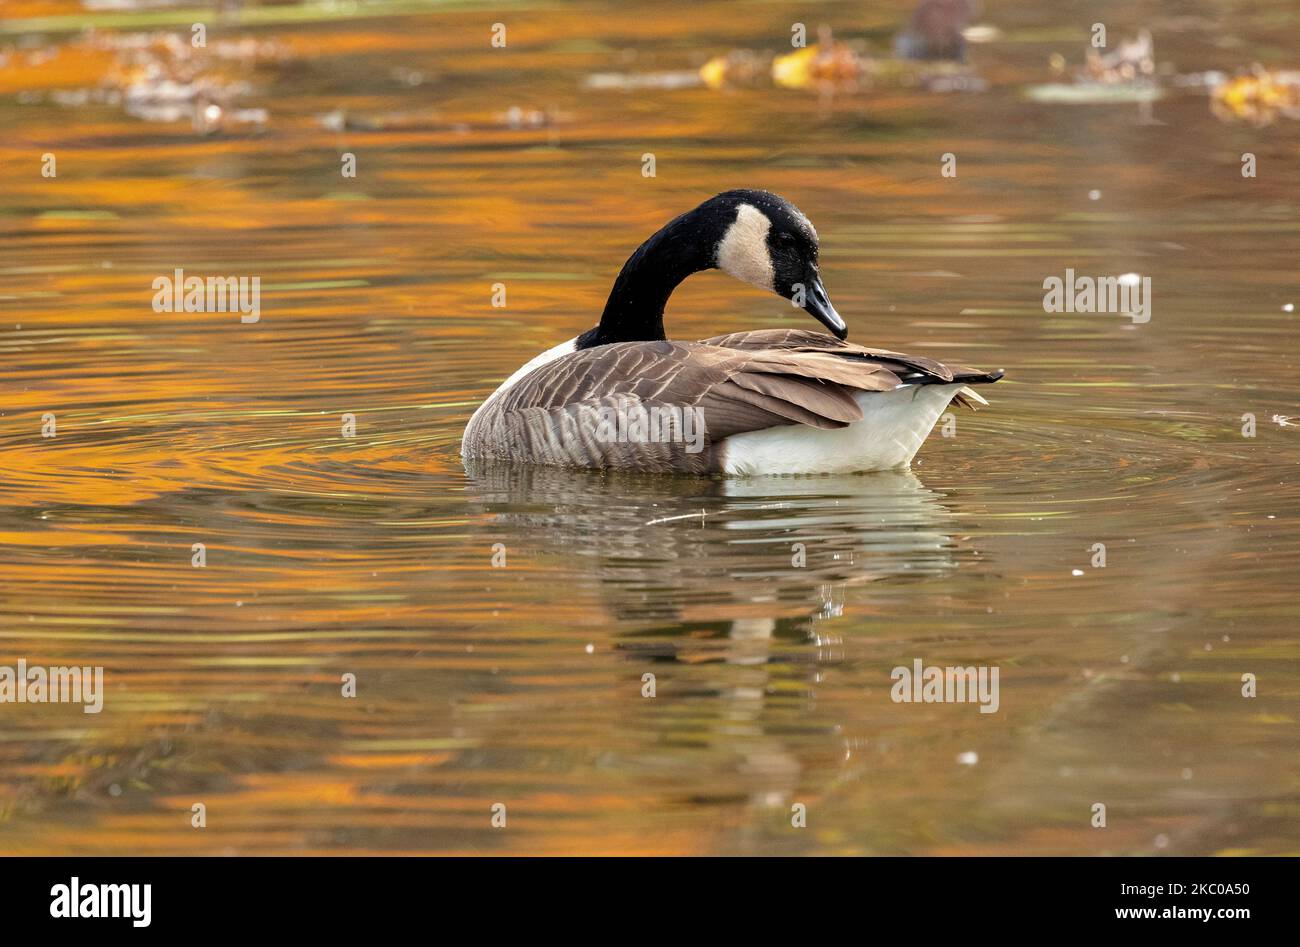 Canada goose on autumn pond Stock Photo